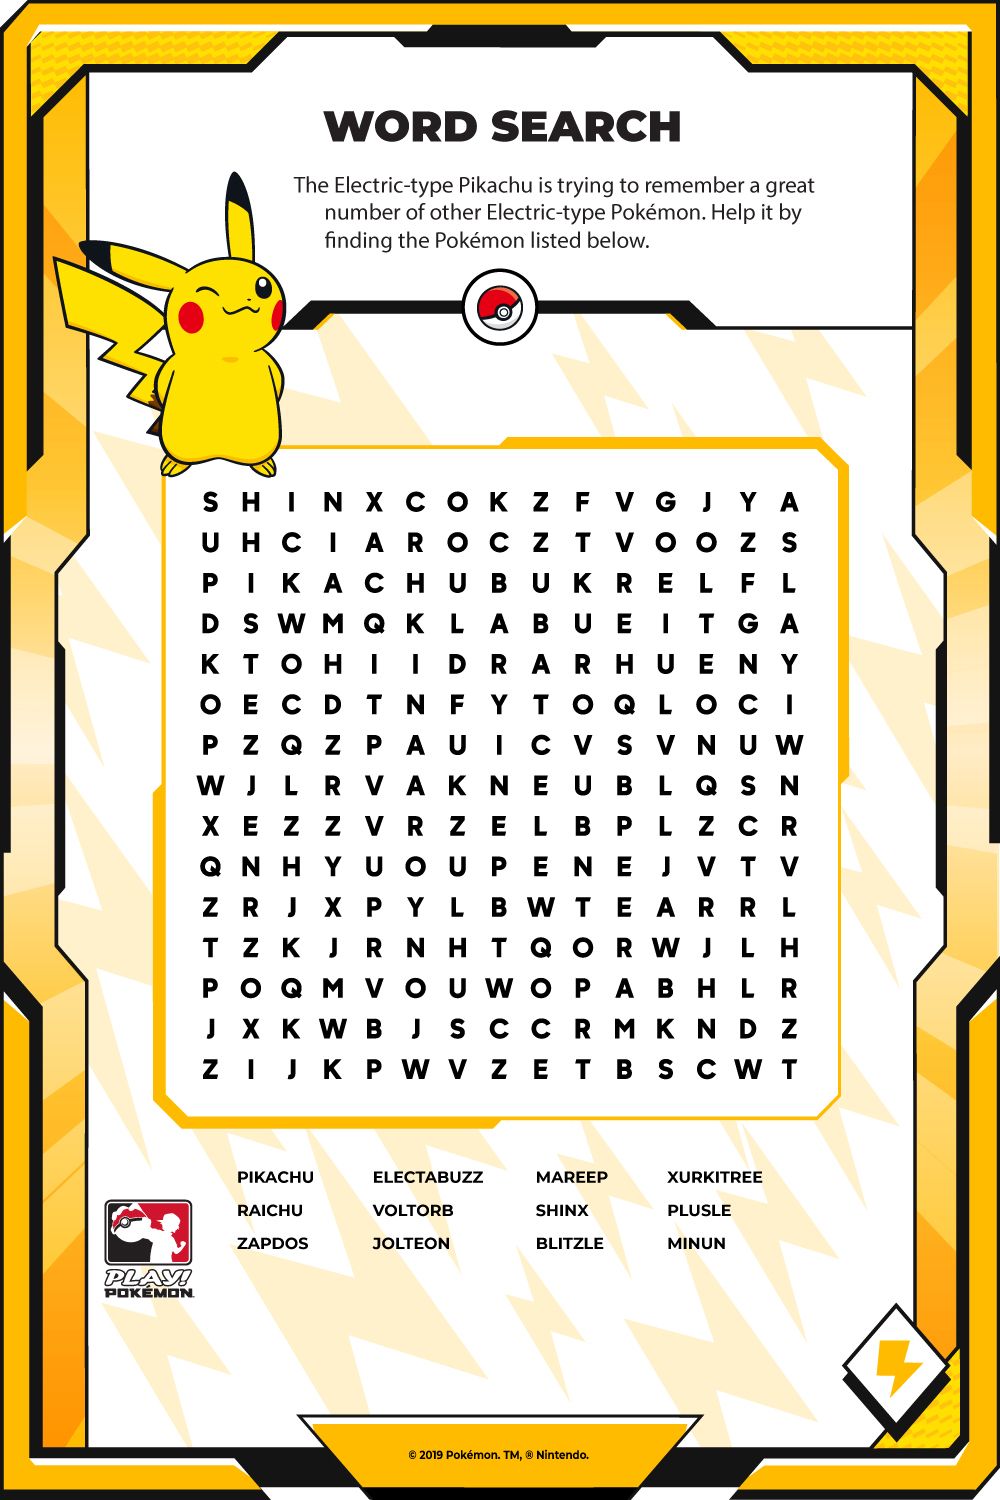 Word search with pikachu pokemon party pokemon birthday party pokemon birthday